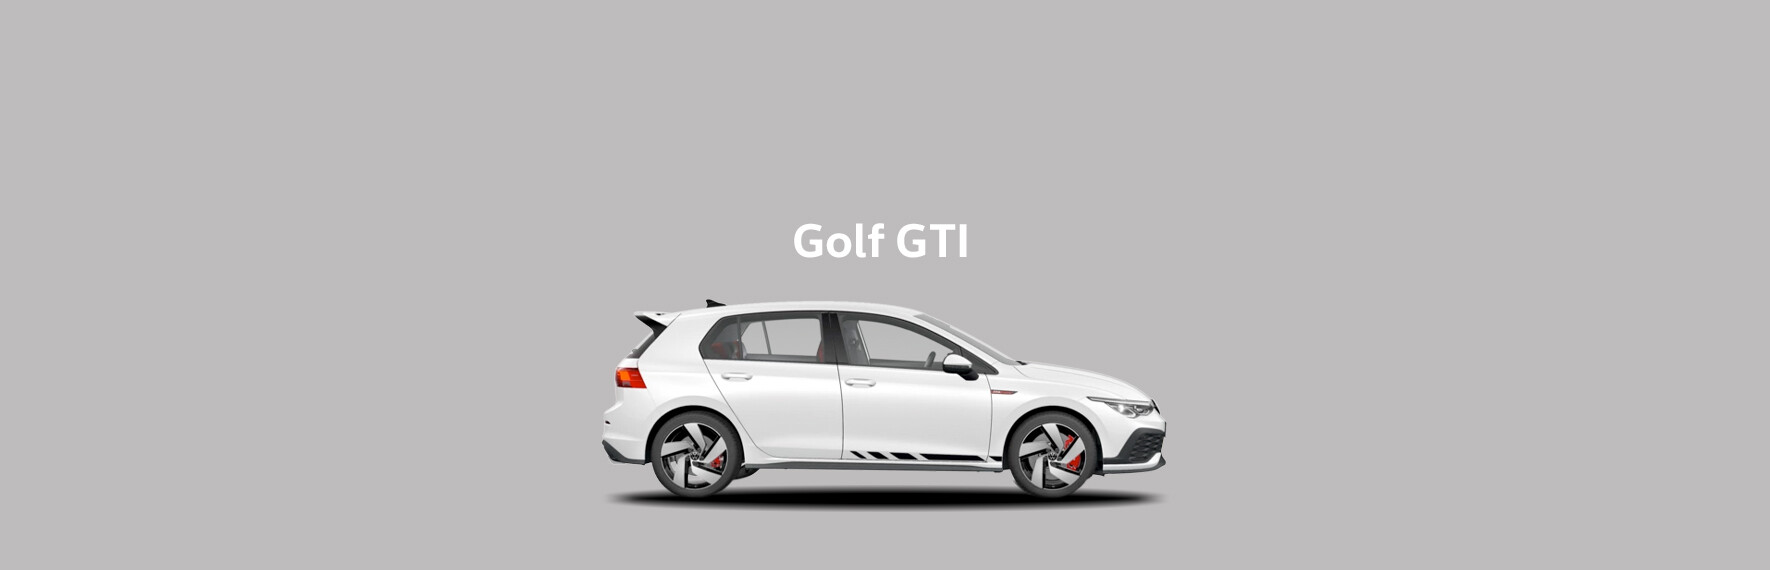 Volkswagen Golf GTI | 2,0 TSI, 180 kW (245 PS), 6-Gang